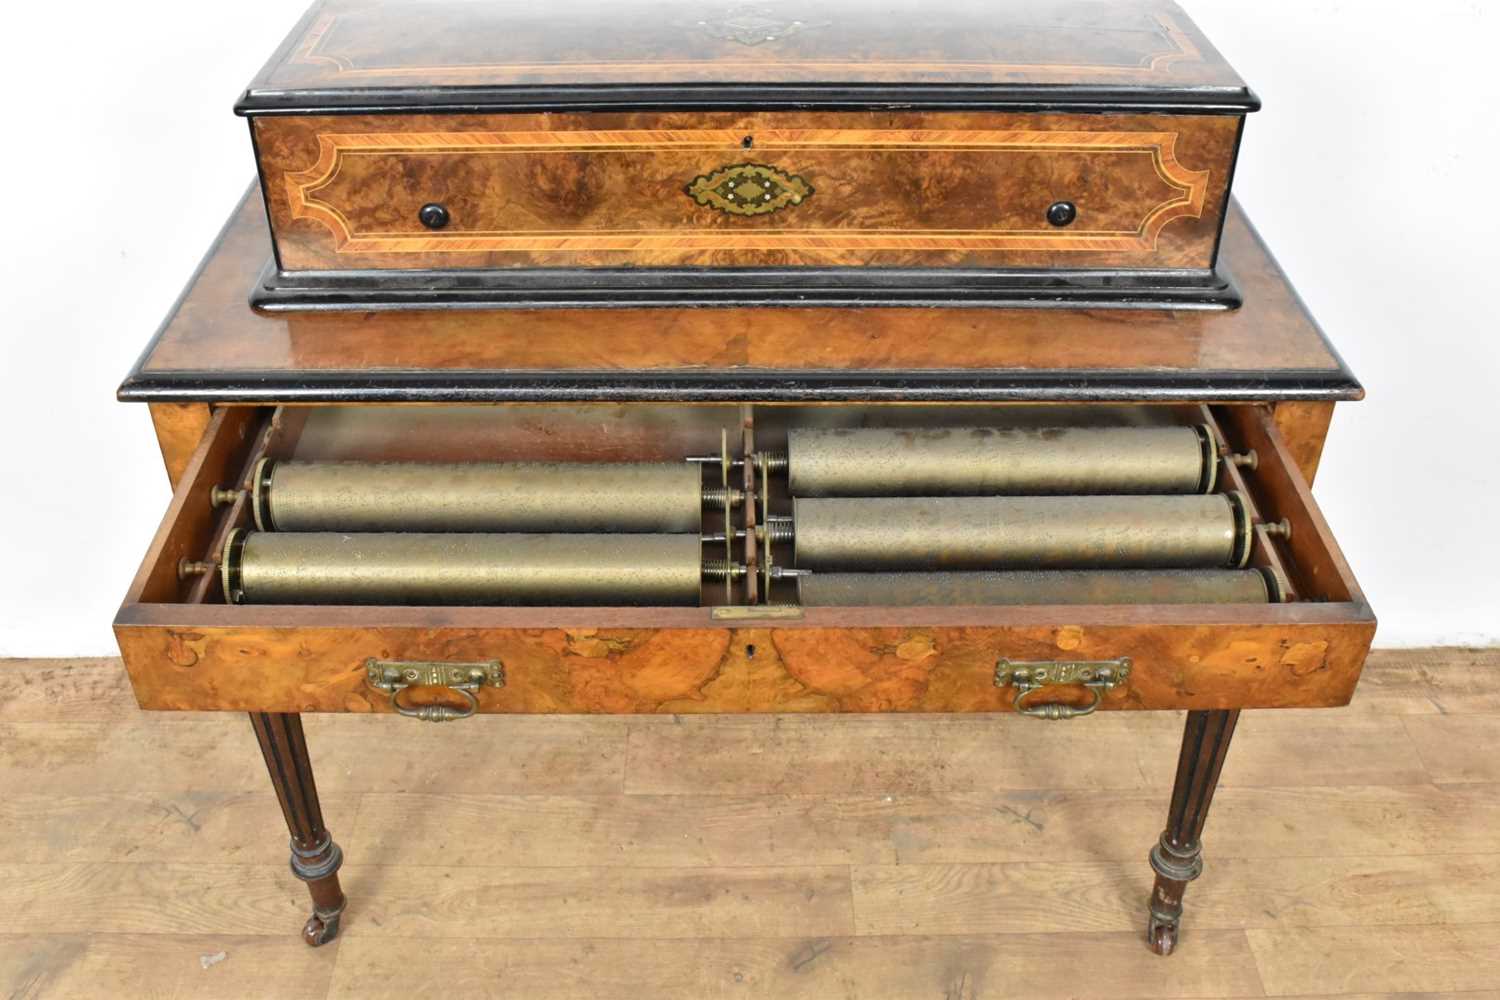 Fine quality 19th century interchangeable music box by Pallard and Vaucher et Fils - Image 12 of 28